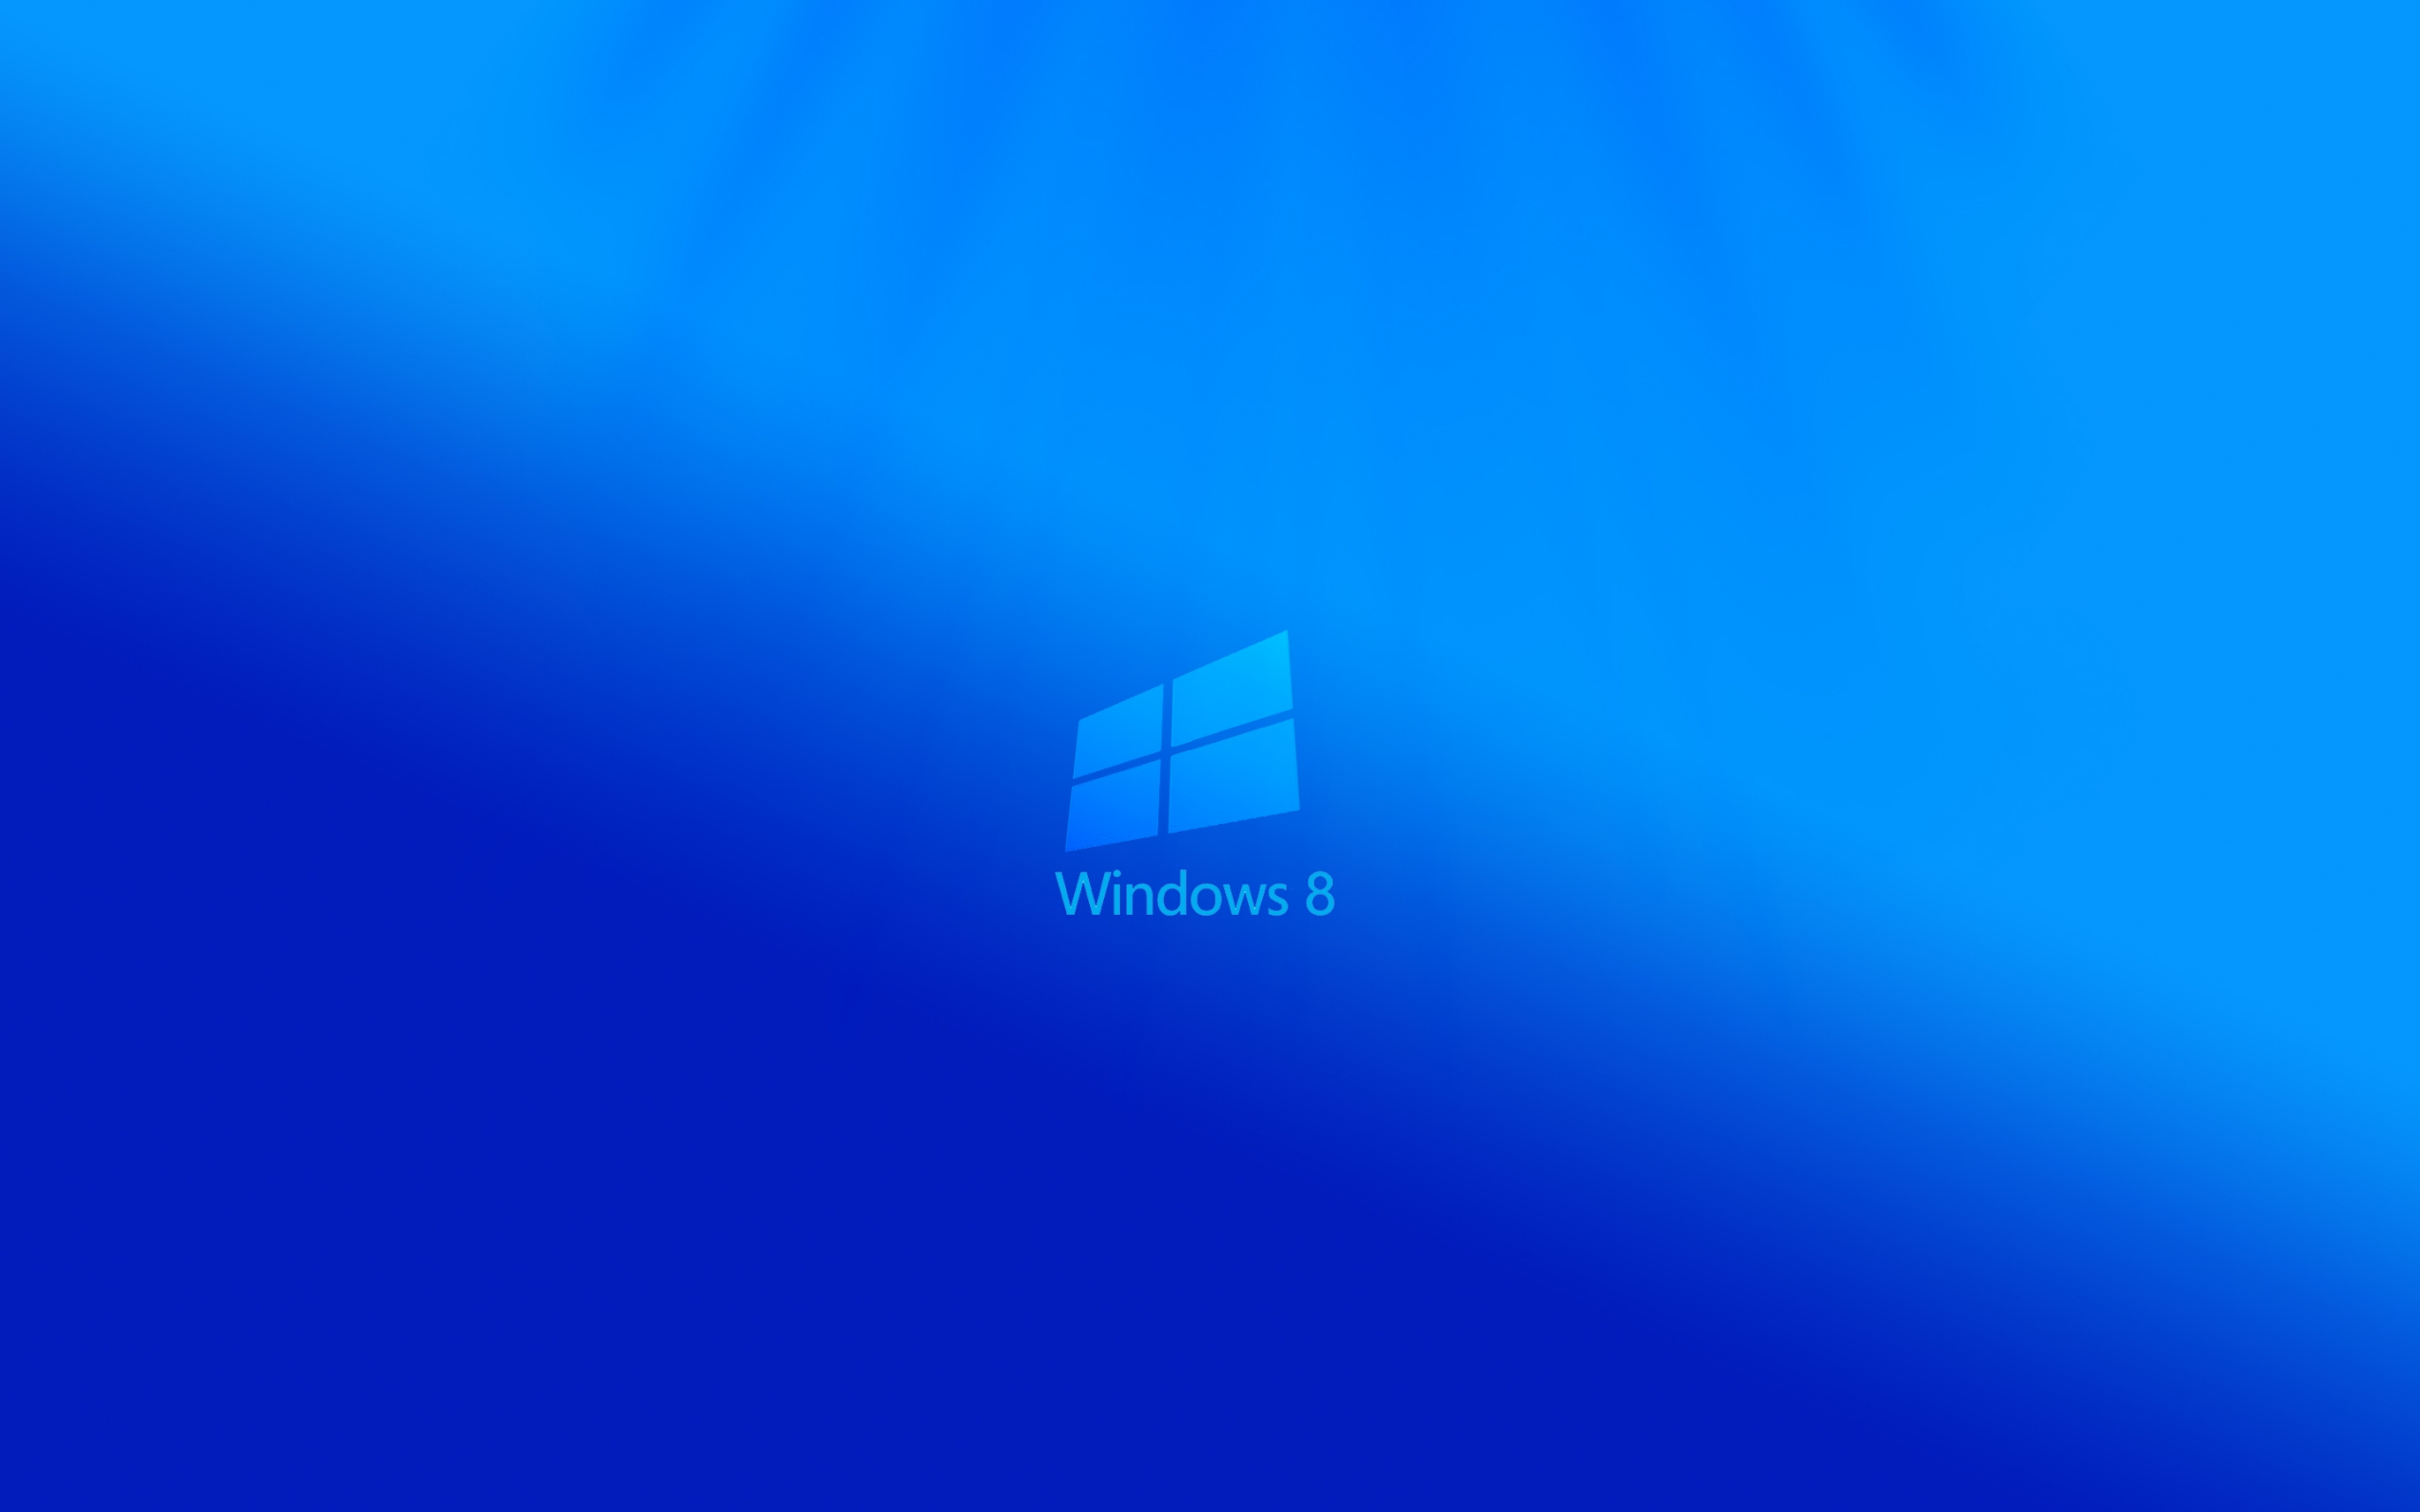 Pin 2560x1440 Windows 8 Black Desktop Pc And Mac Wallpaper on